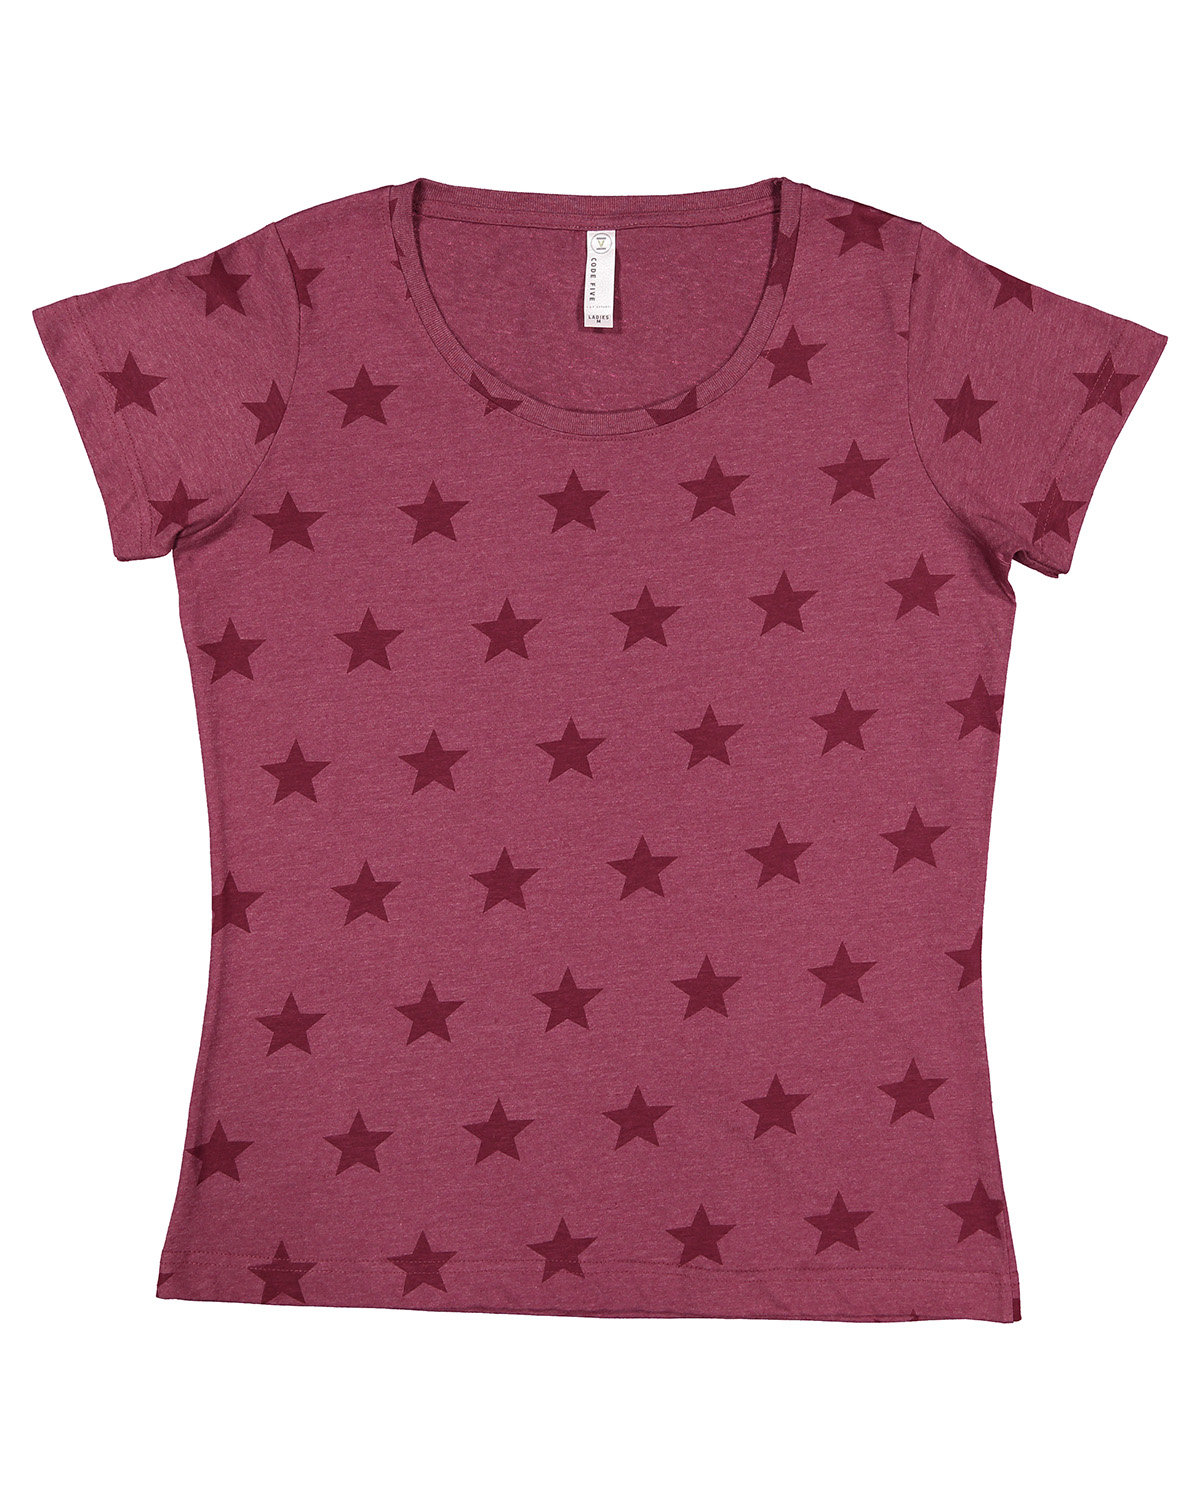 Code Five Ladies' Five Star T-Shirt BURGUNDY STAR 